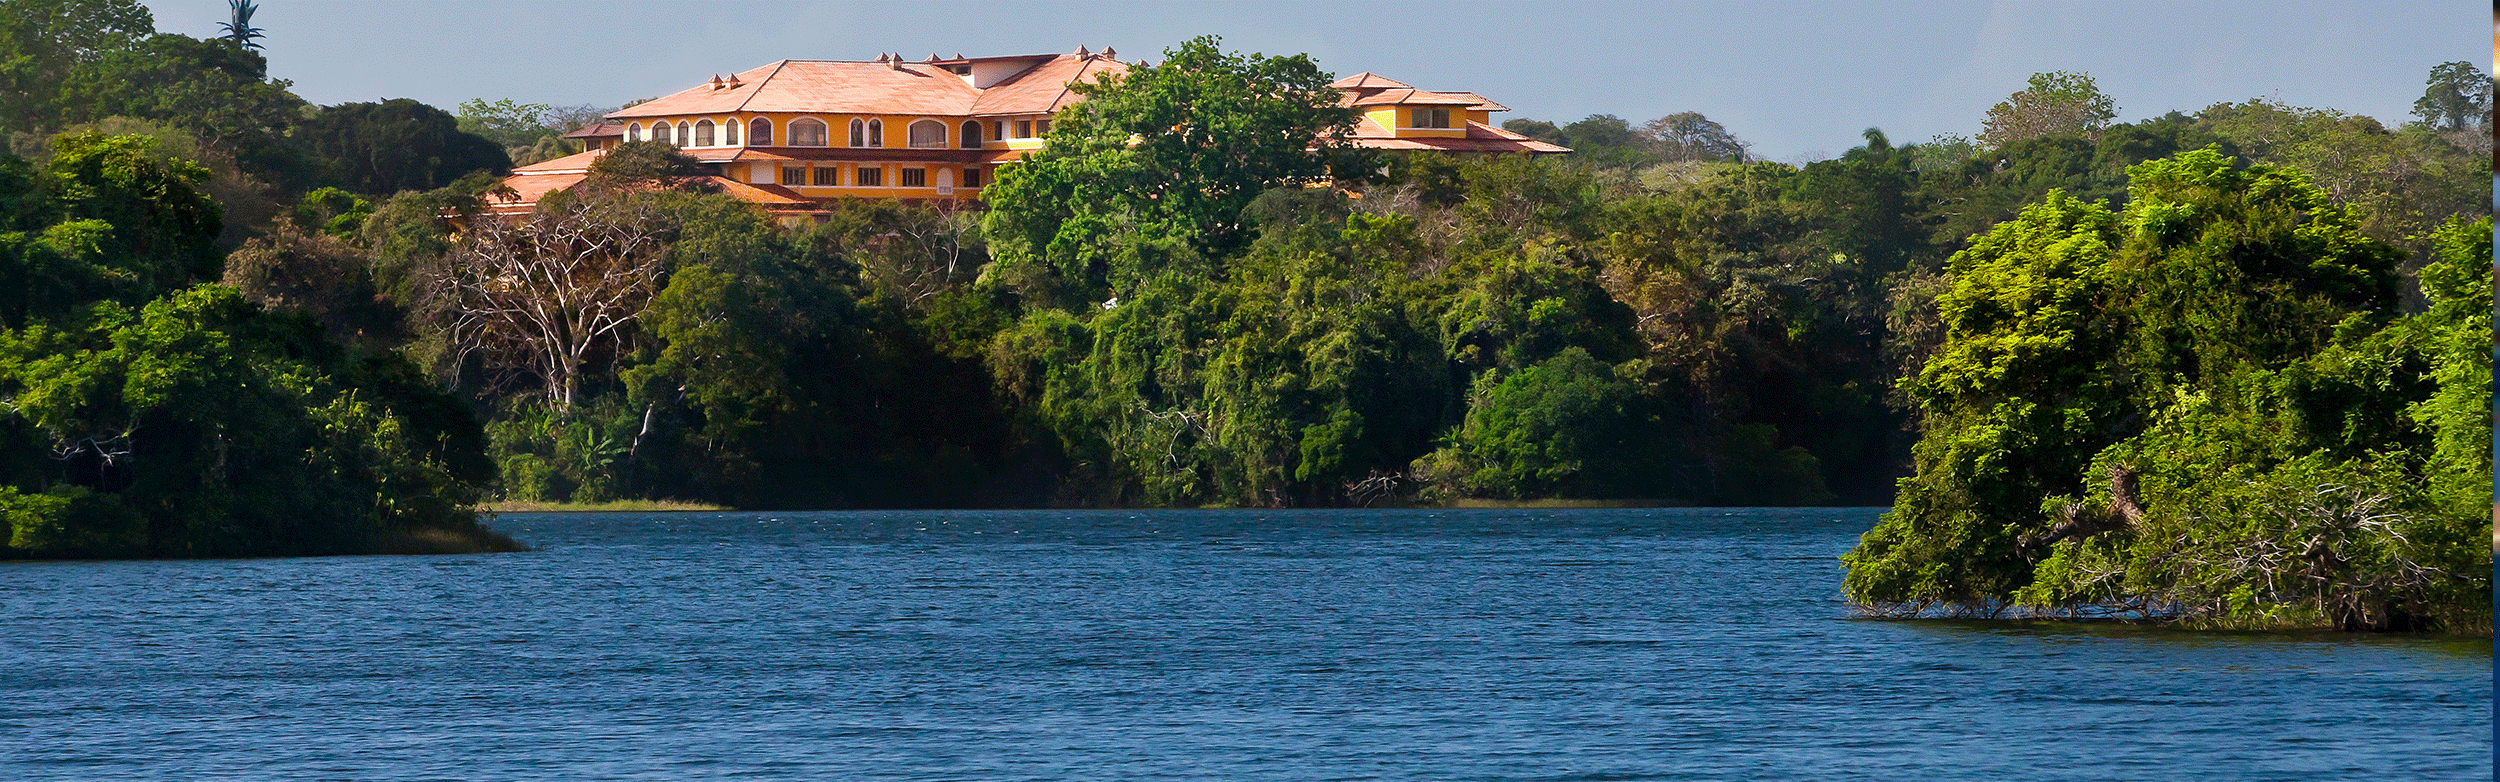 Hotel Melia Panama Canal